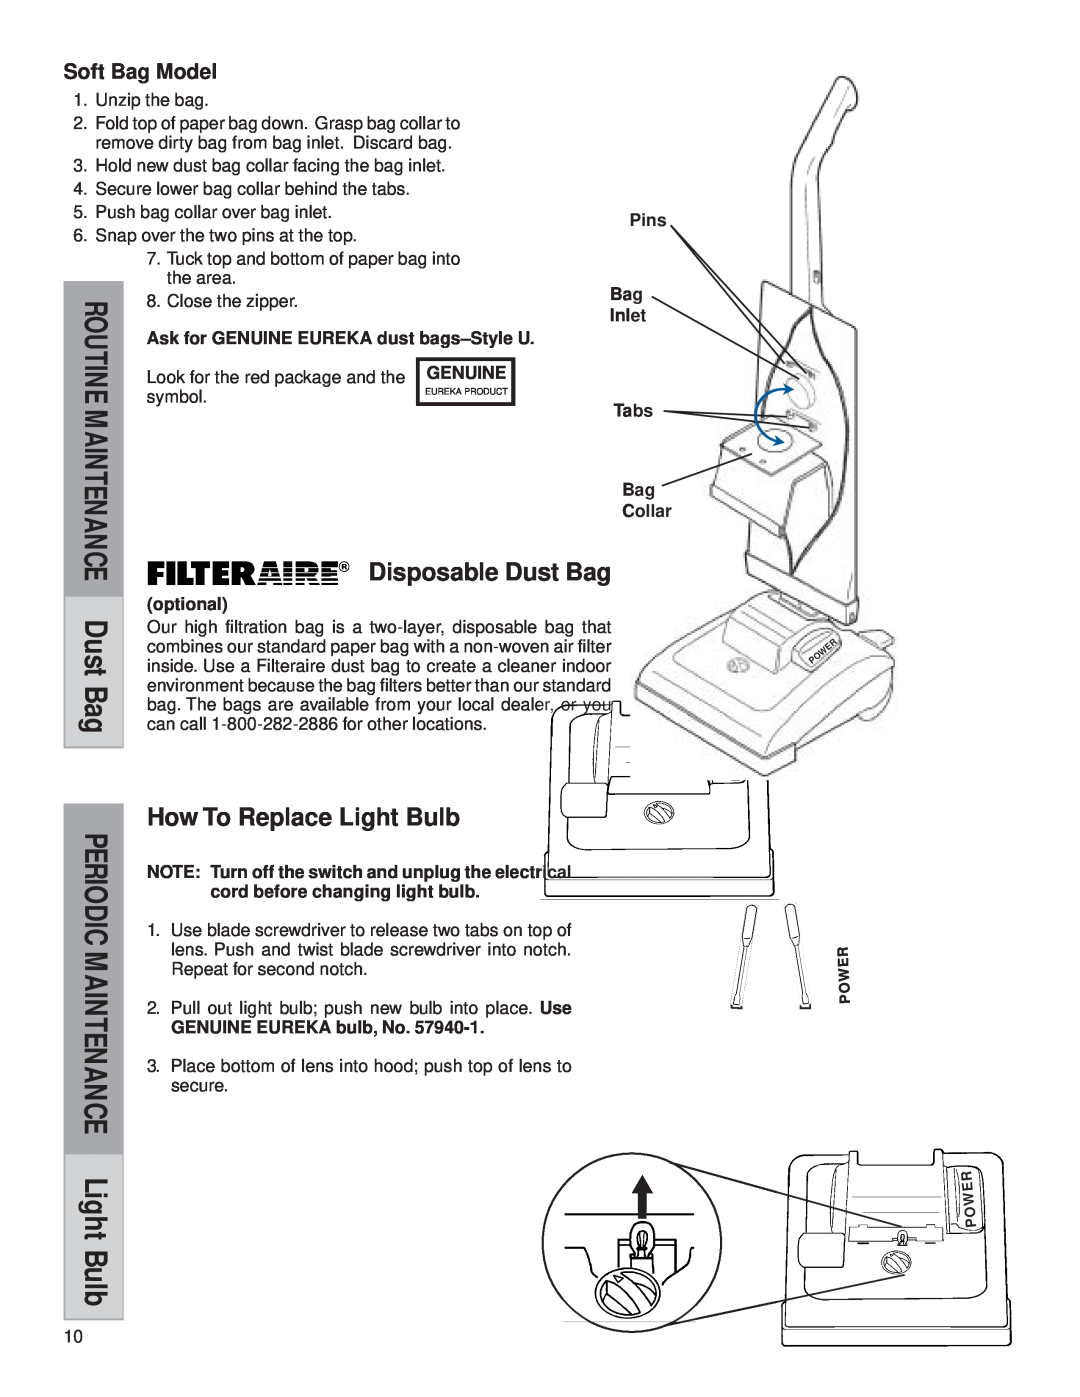 Eureka 7600 LightBulb, Disposable Dust Bag, How To Replace Light Bulb, Soft Bag Model, Pins, Close the zipper, Inlet, Tabs 